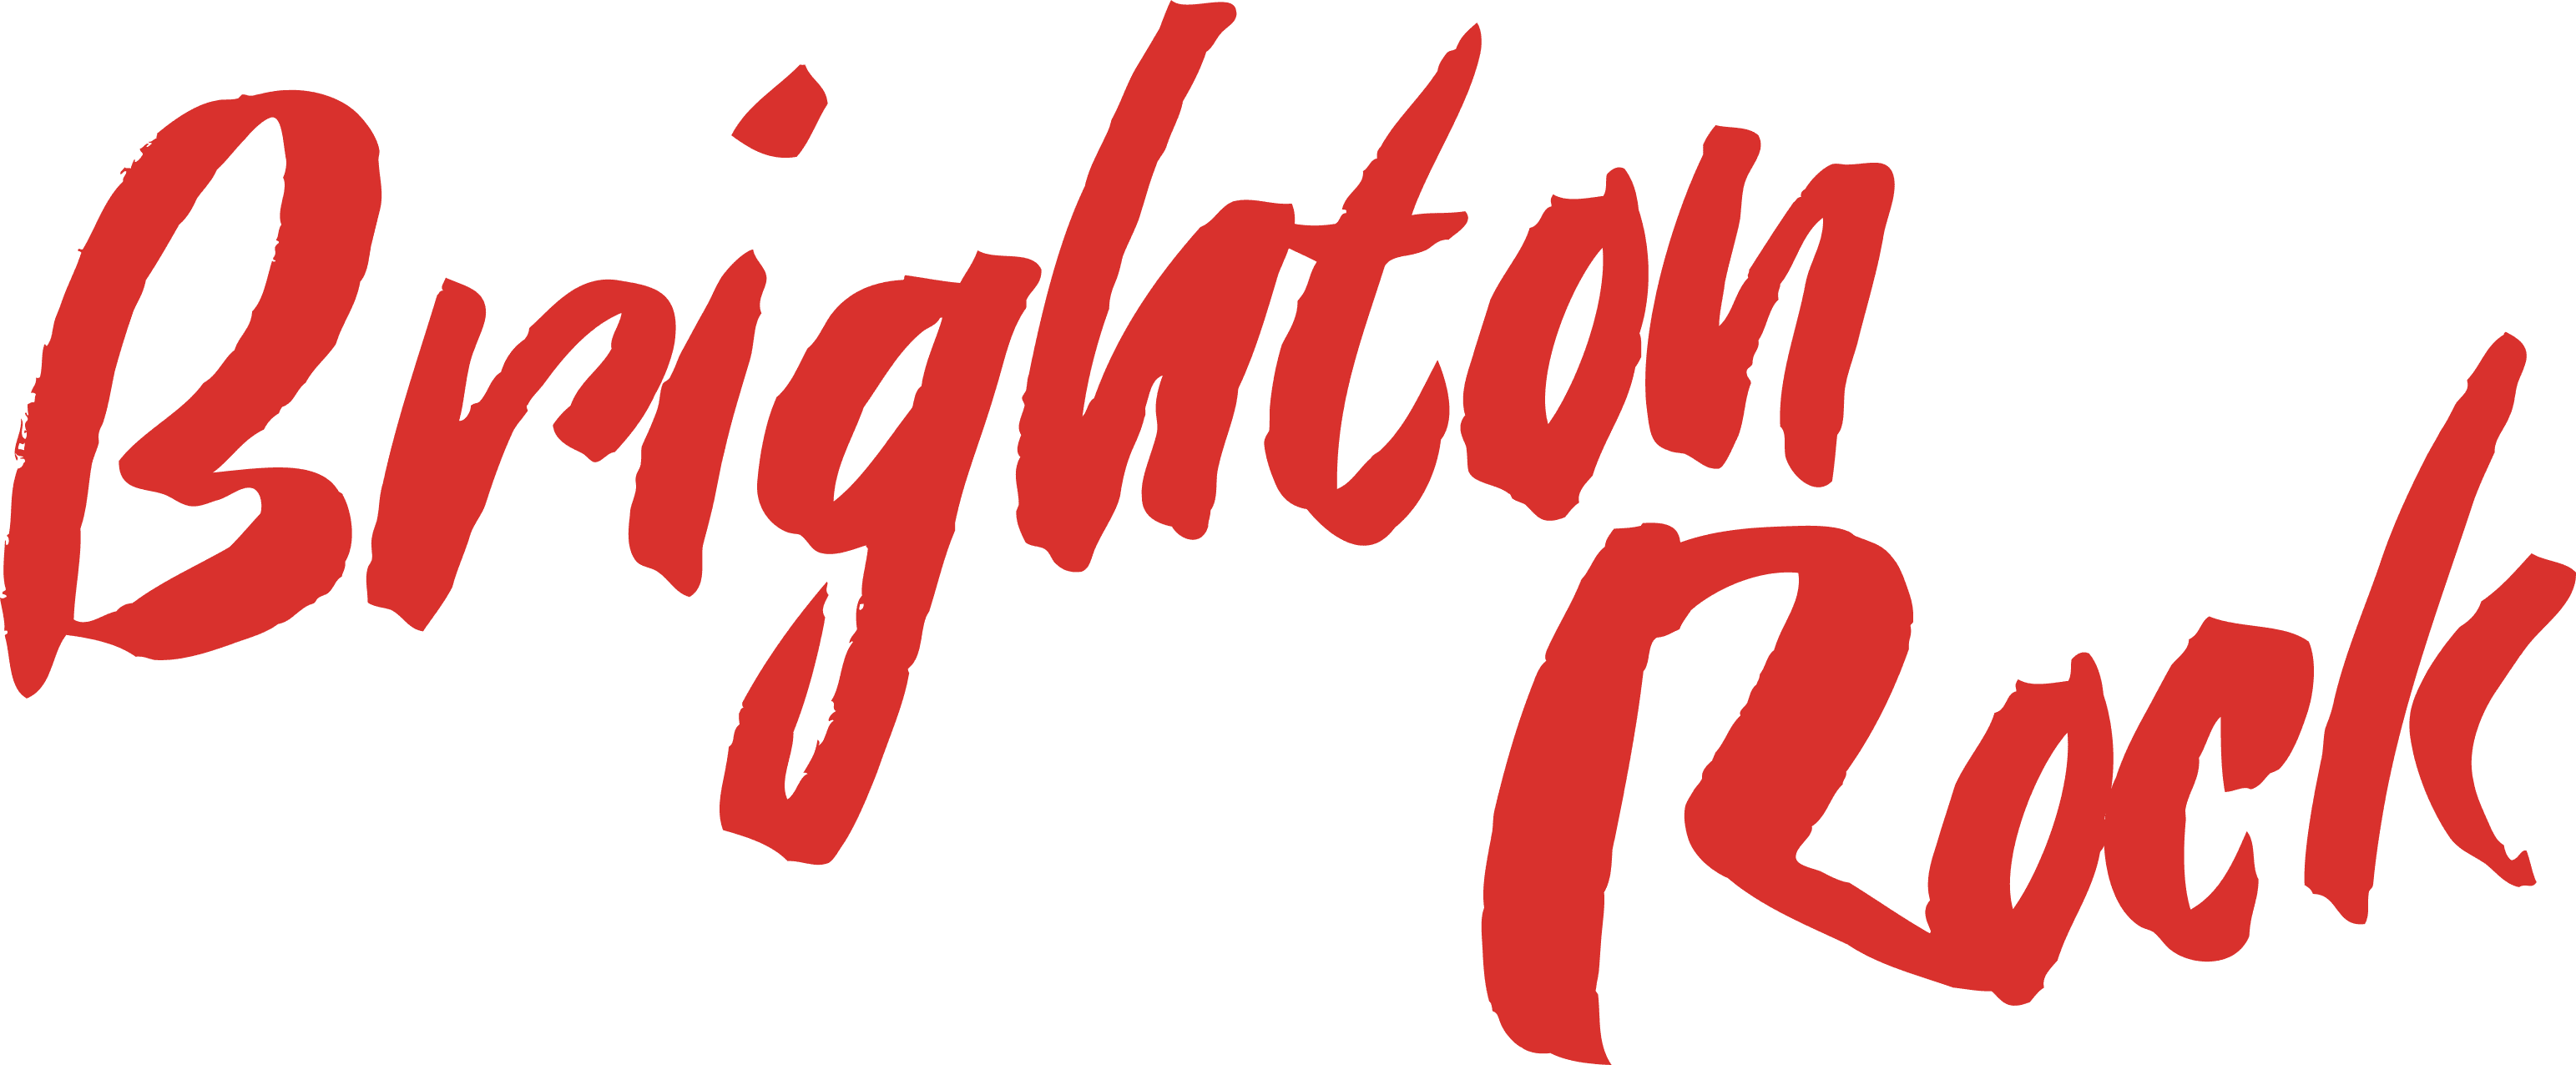 Brighton Rock logo